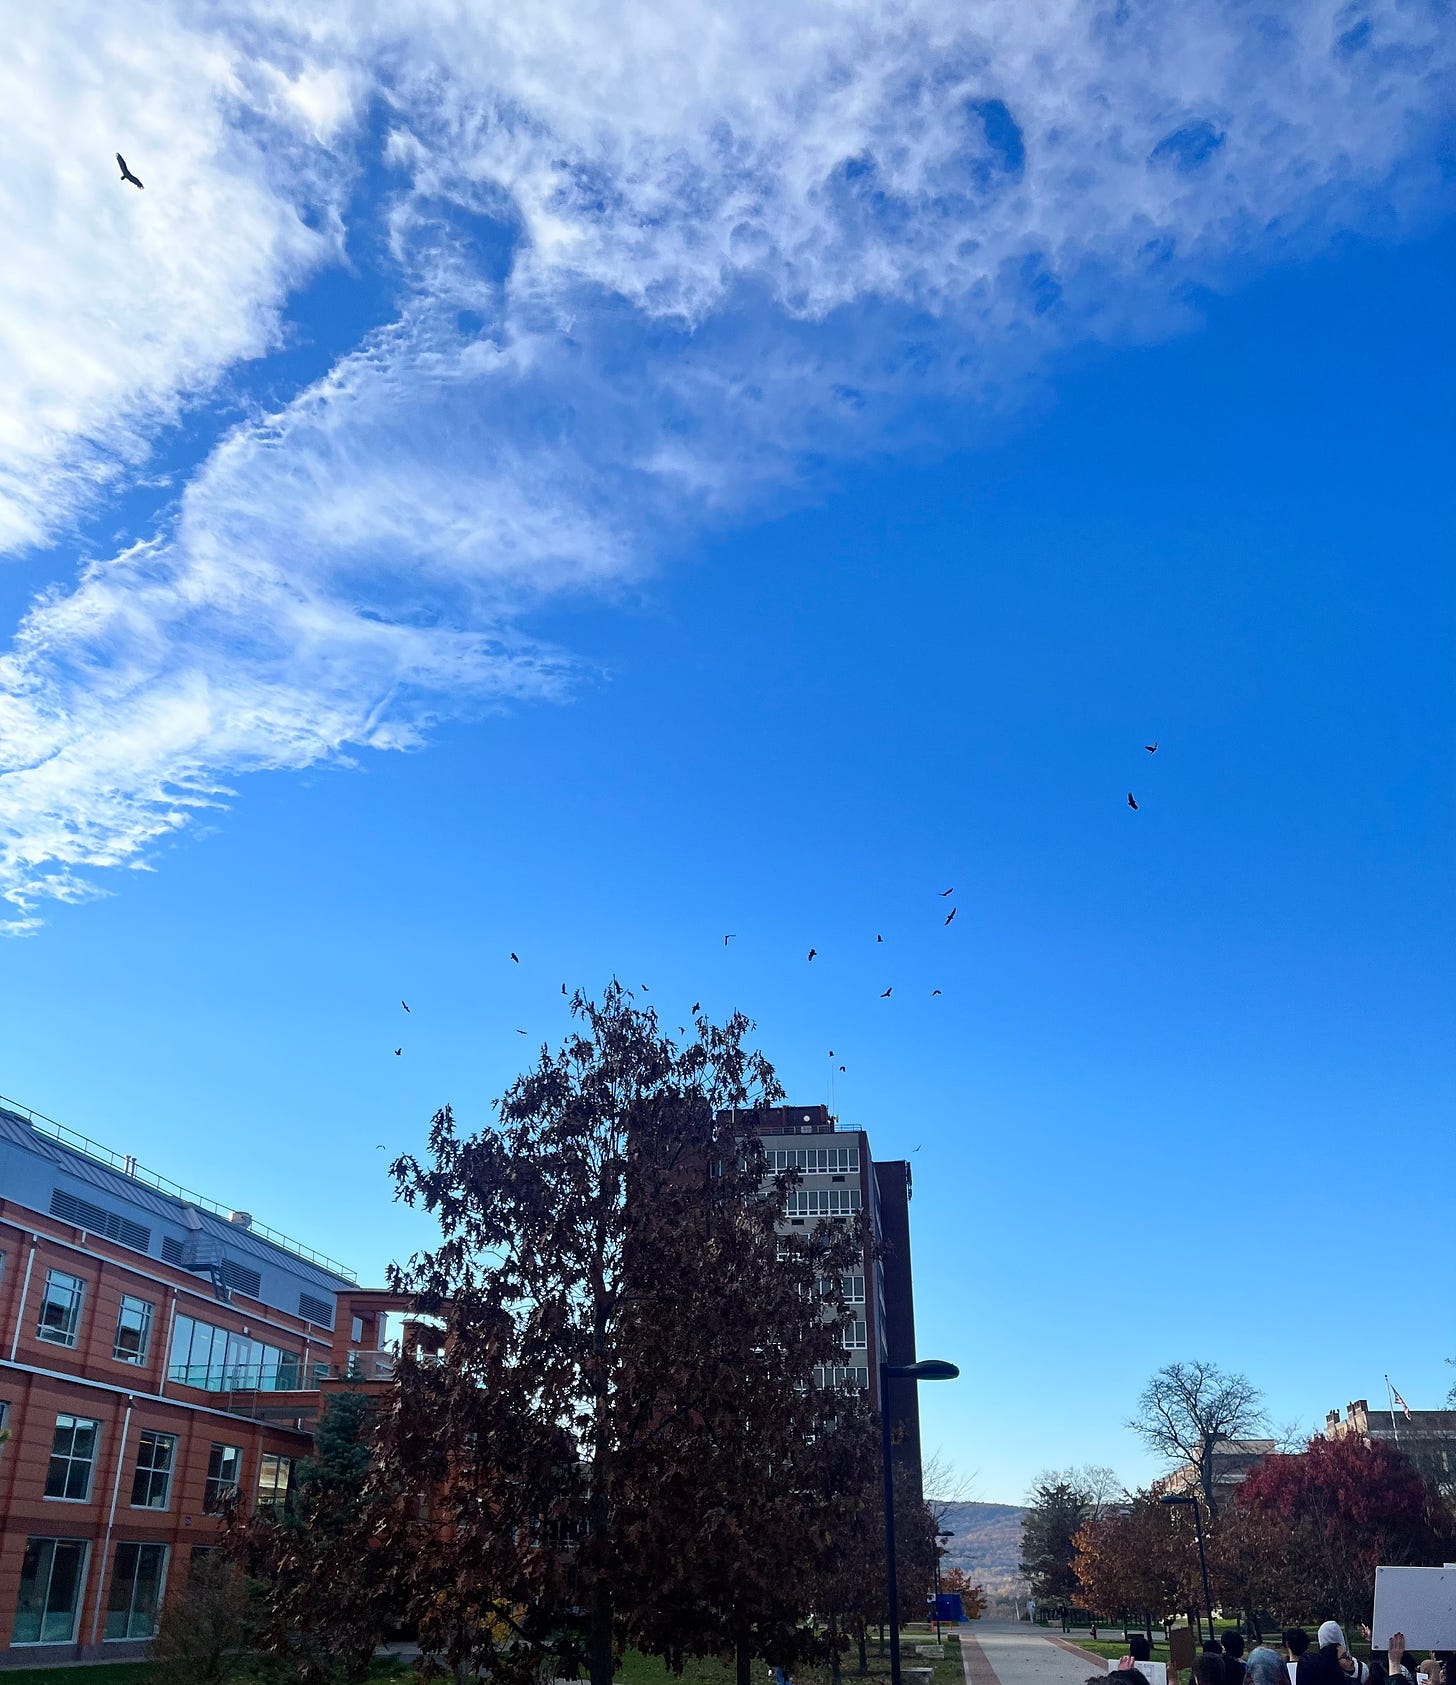 Birds circle over a deep blue sky.